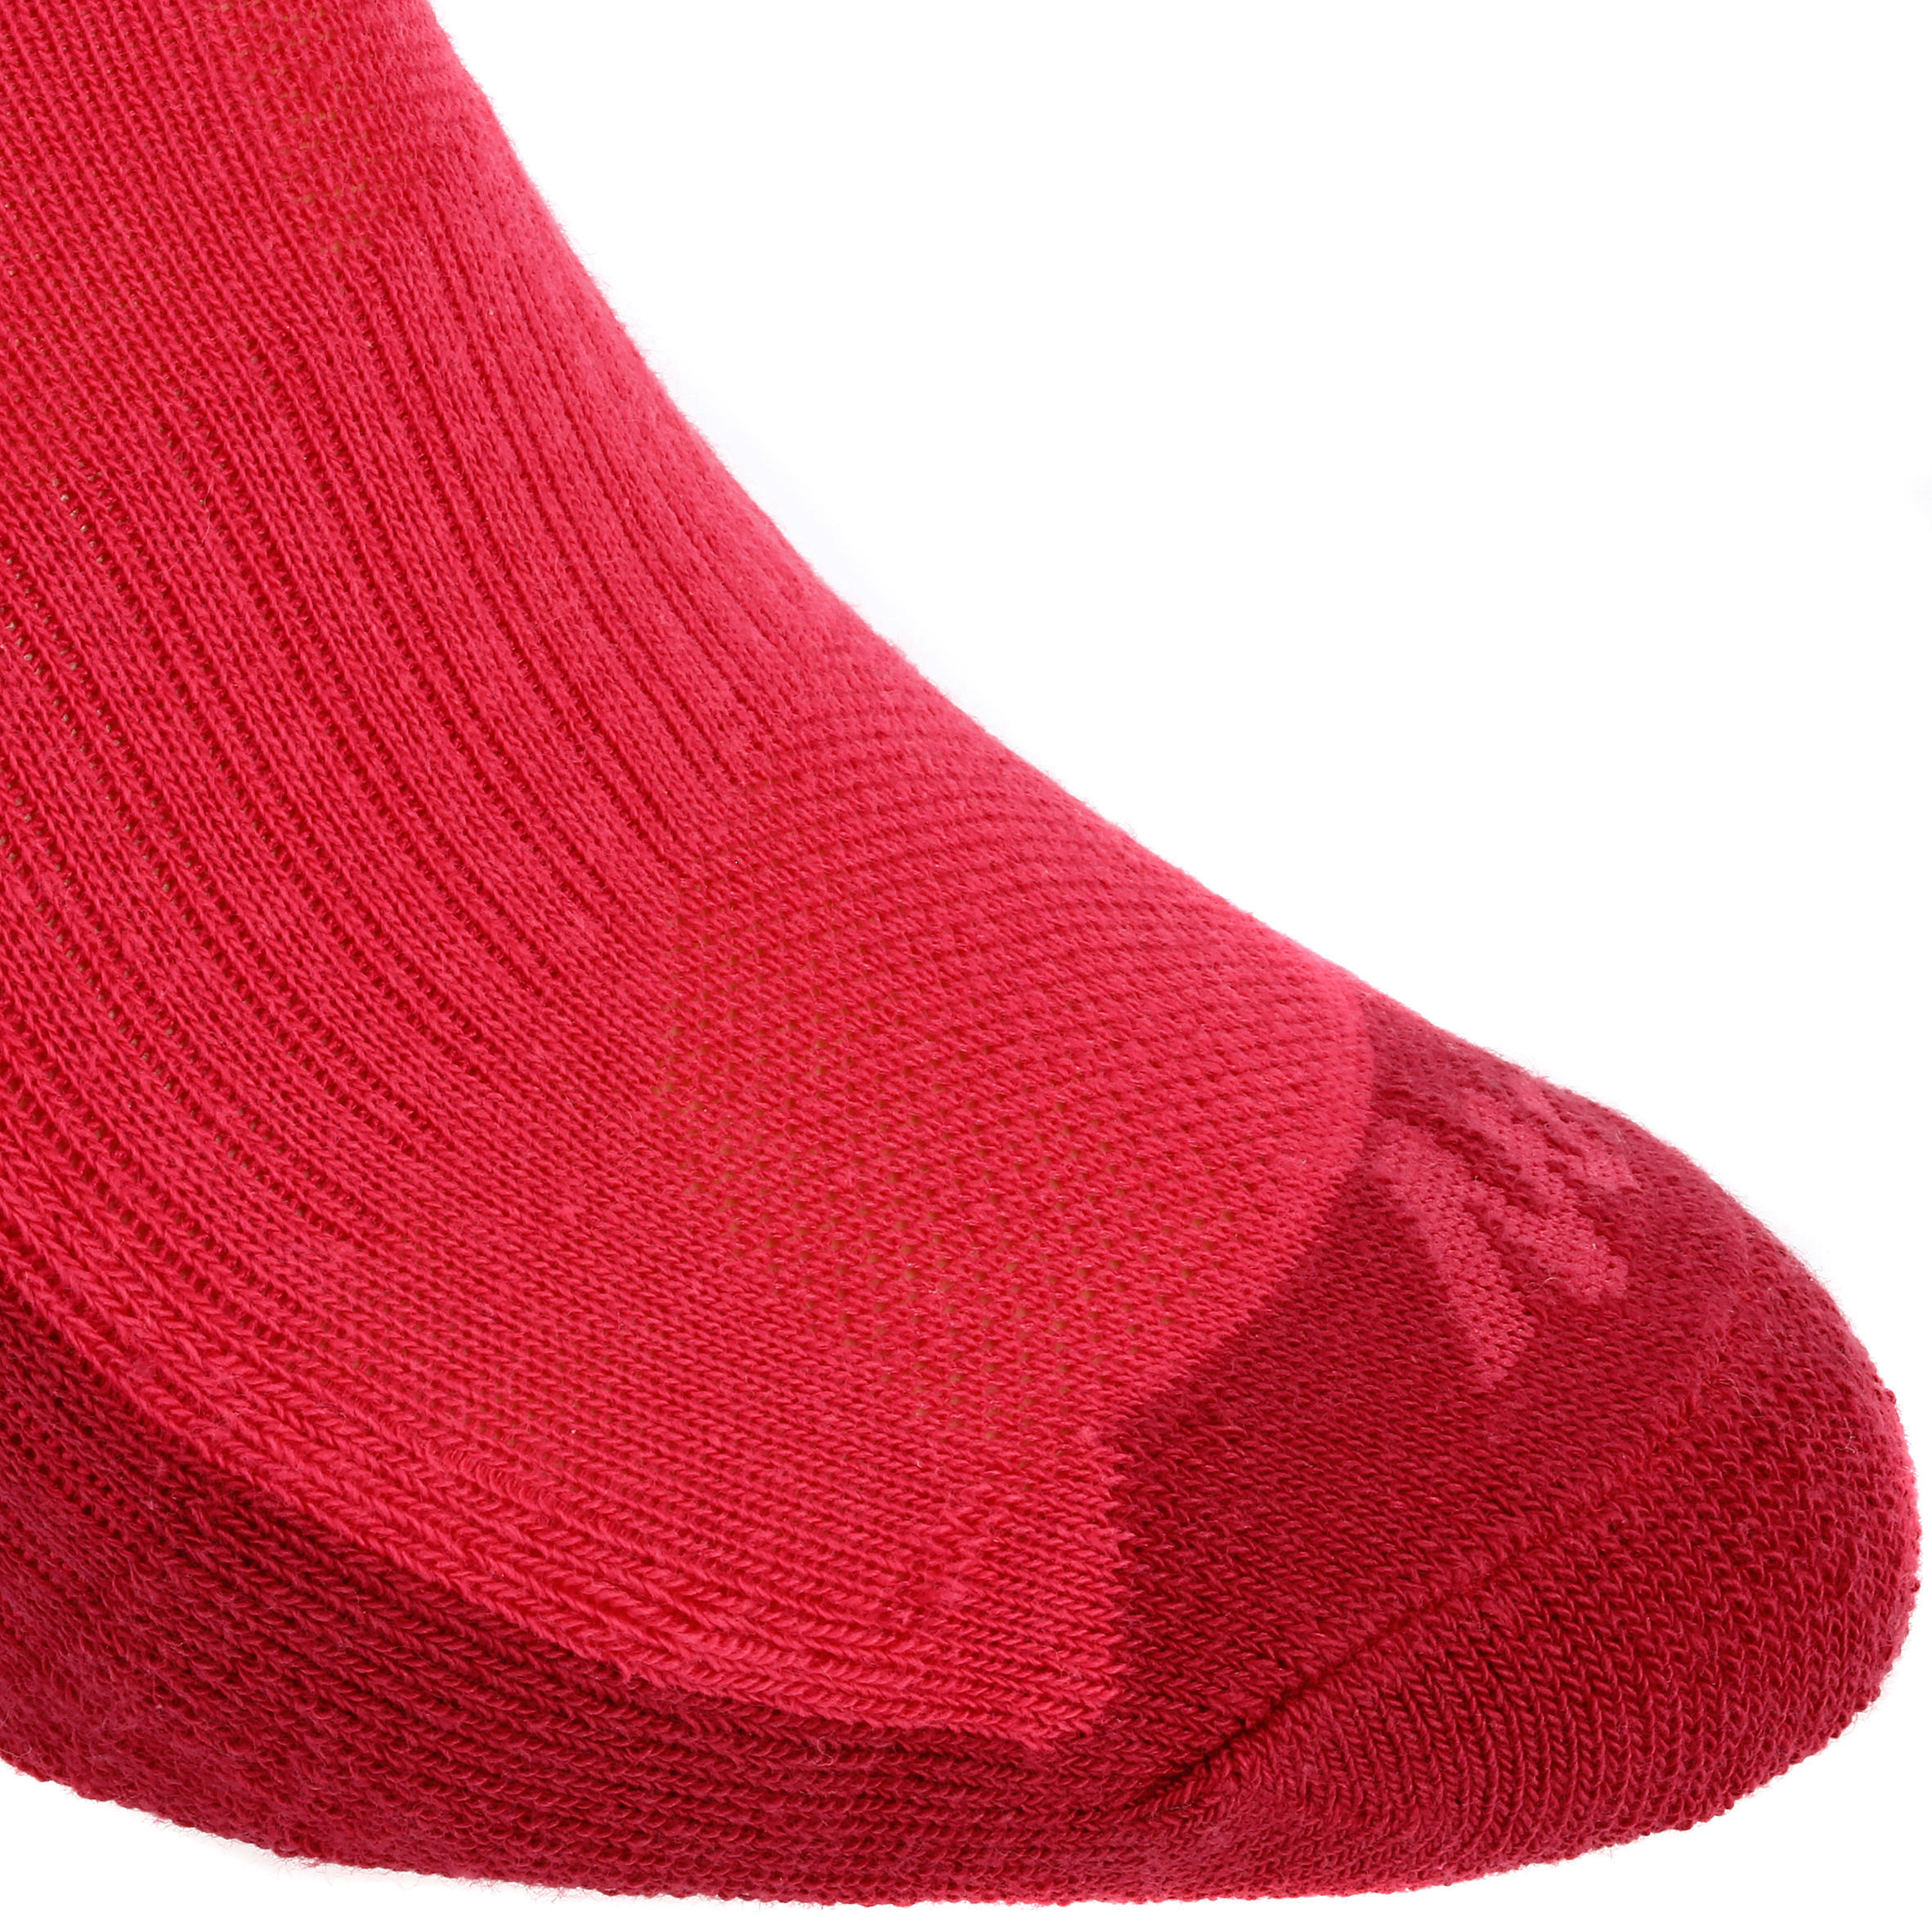 Kids’ hiking socks MH100 Pink/Grey packaged as 2 pairs 8/9